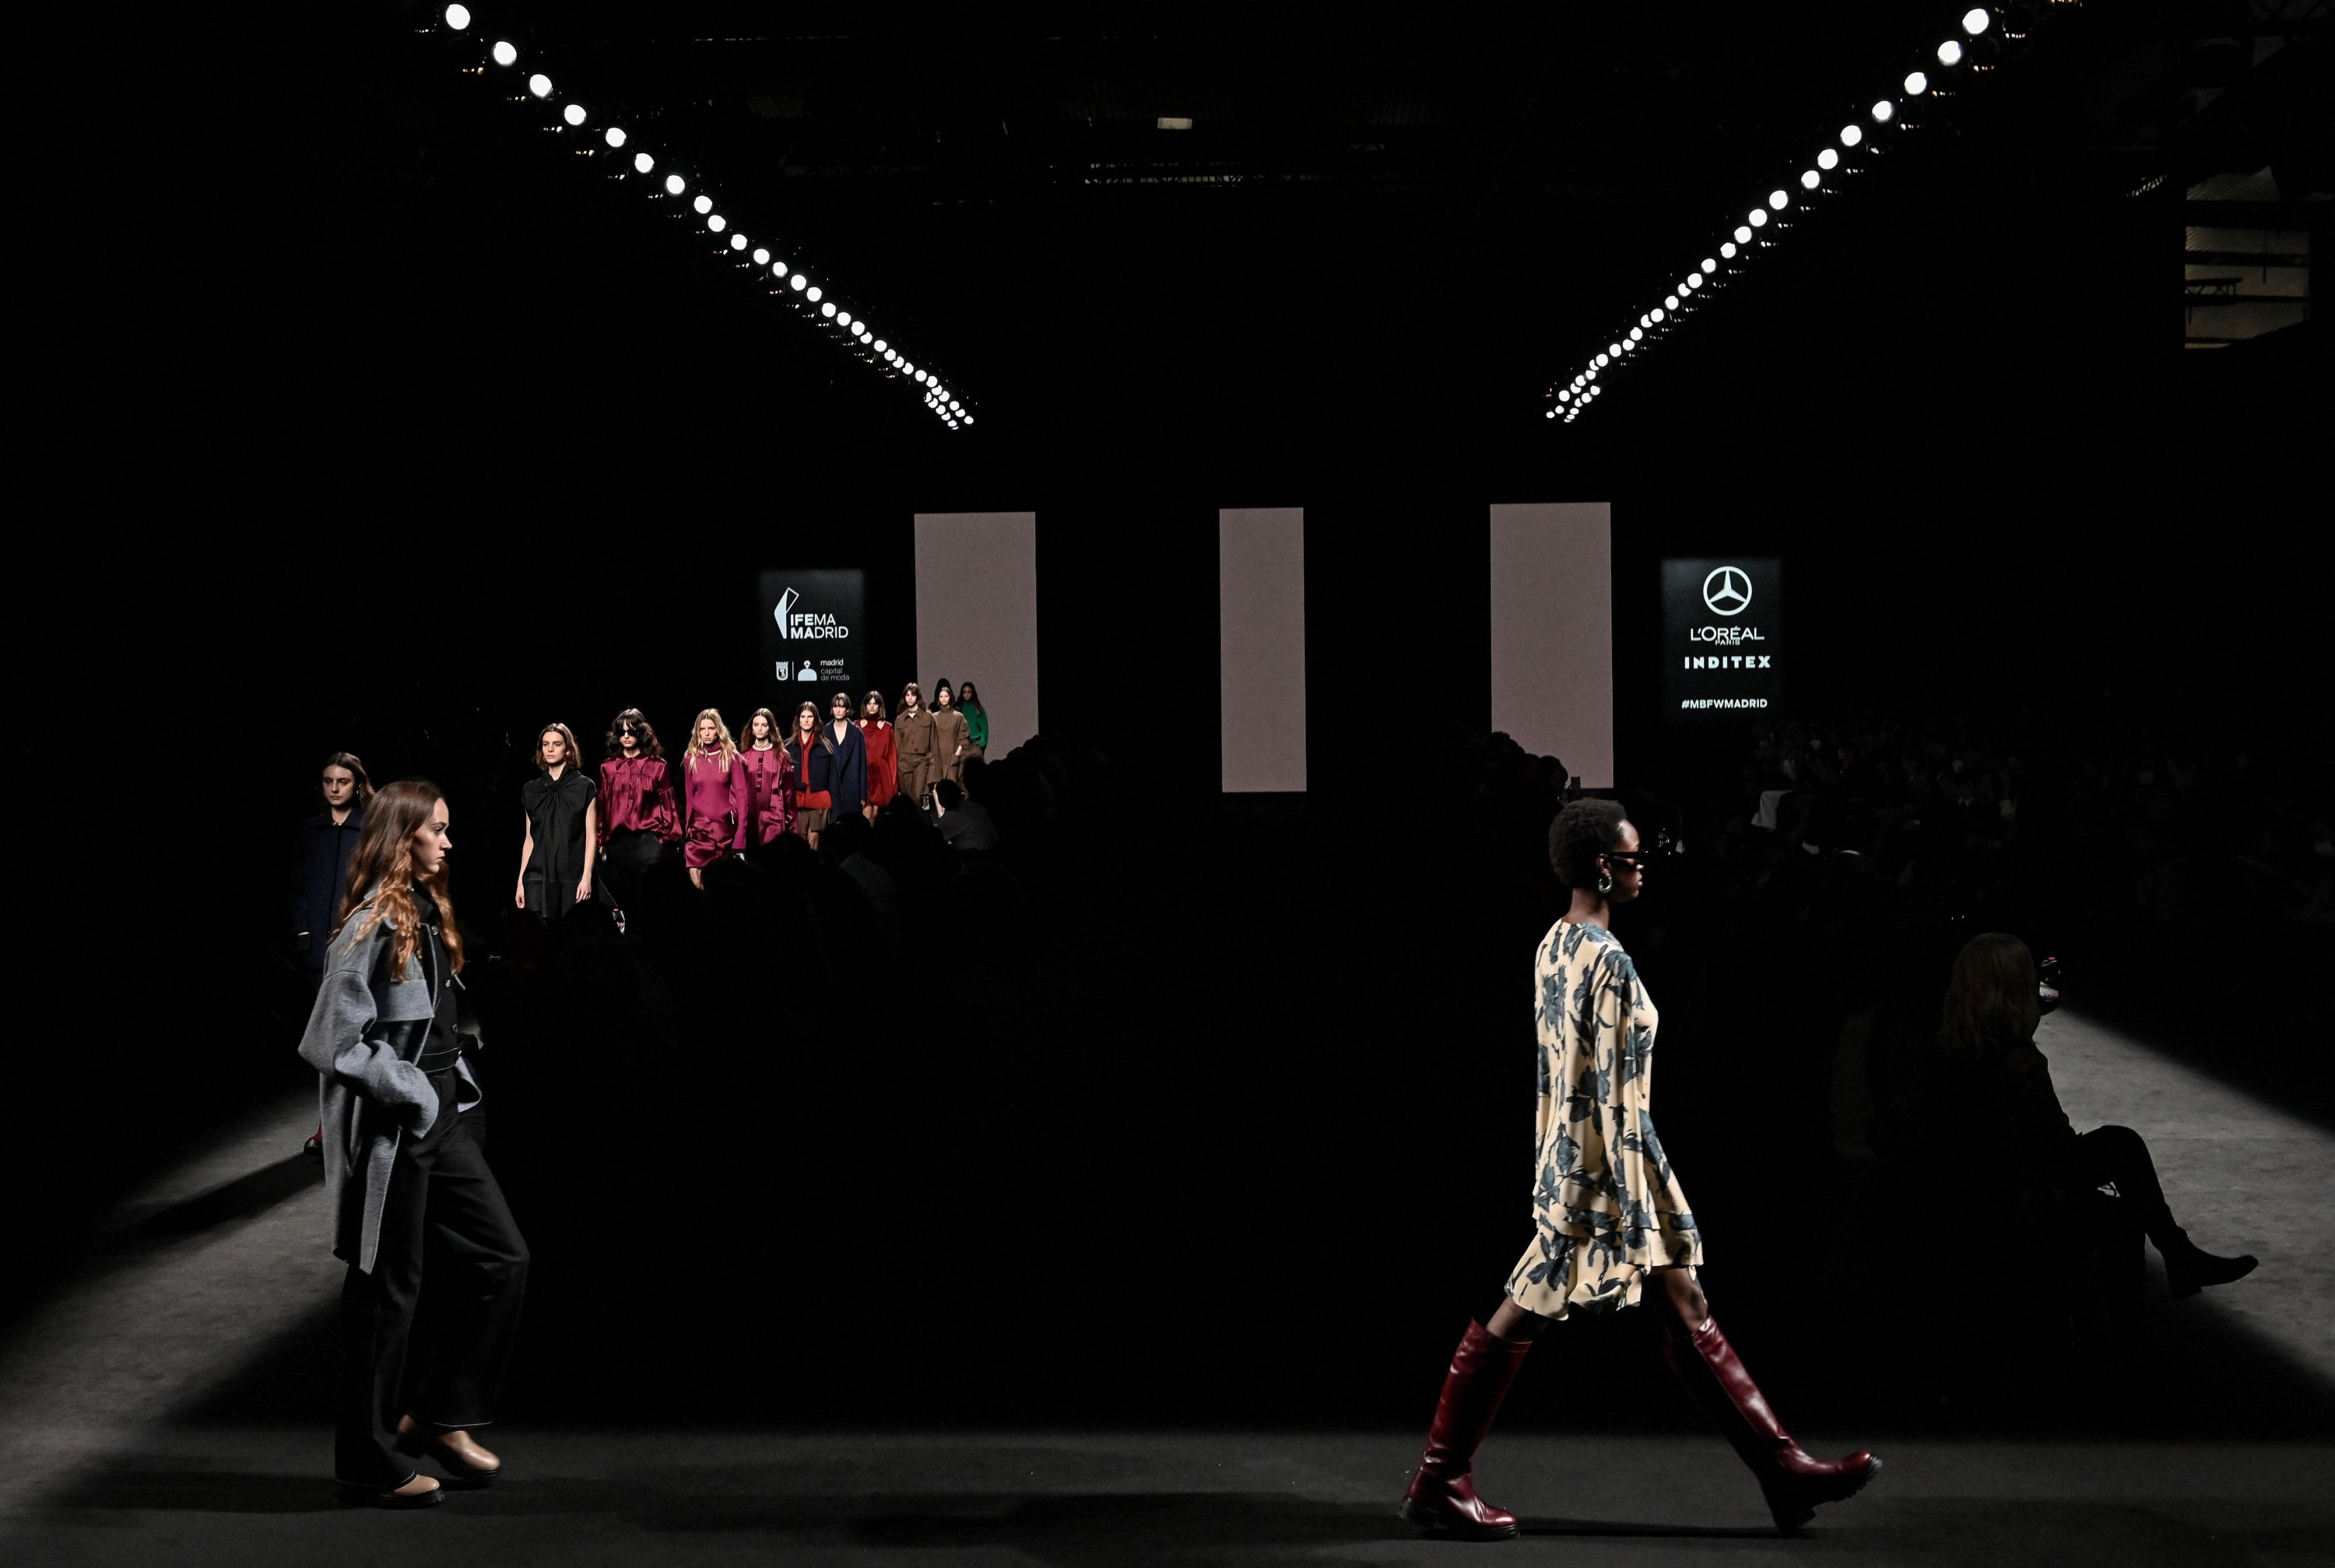 Madrid Fashion Show 2022 also has live catwalk parades | Daily Sabah